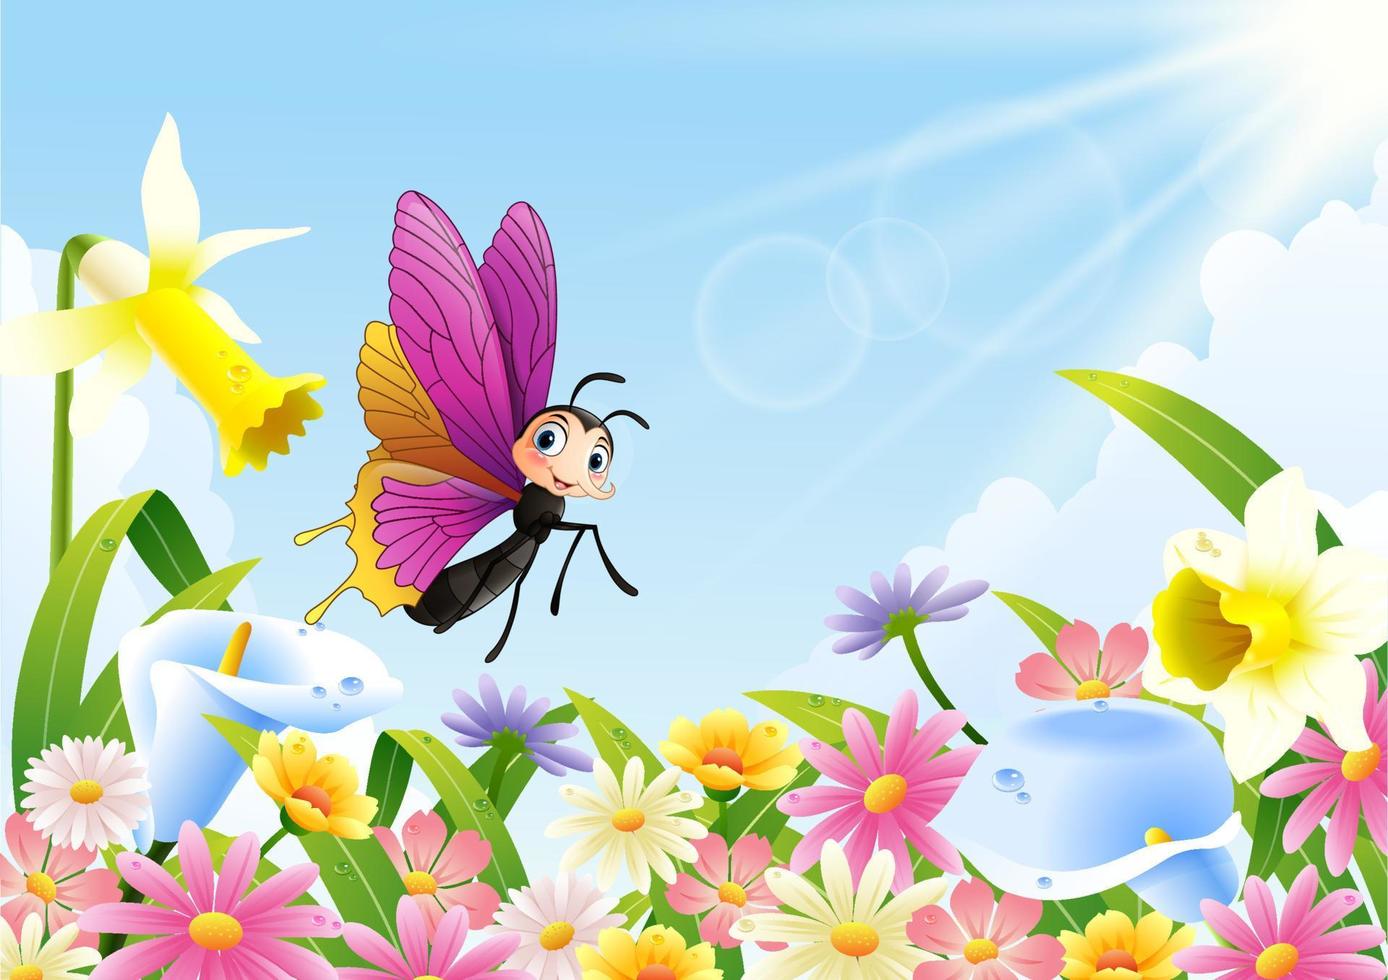 Cute butterfly flying over flower field vector